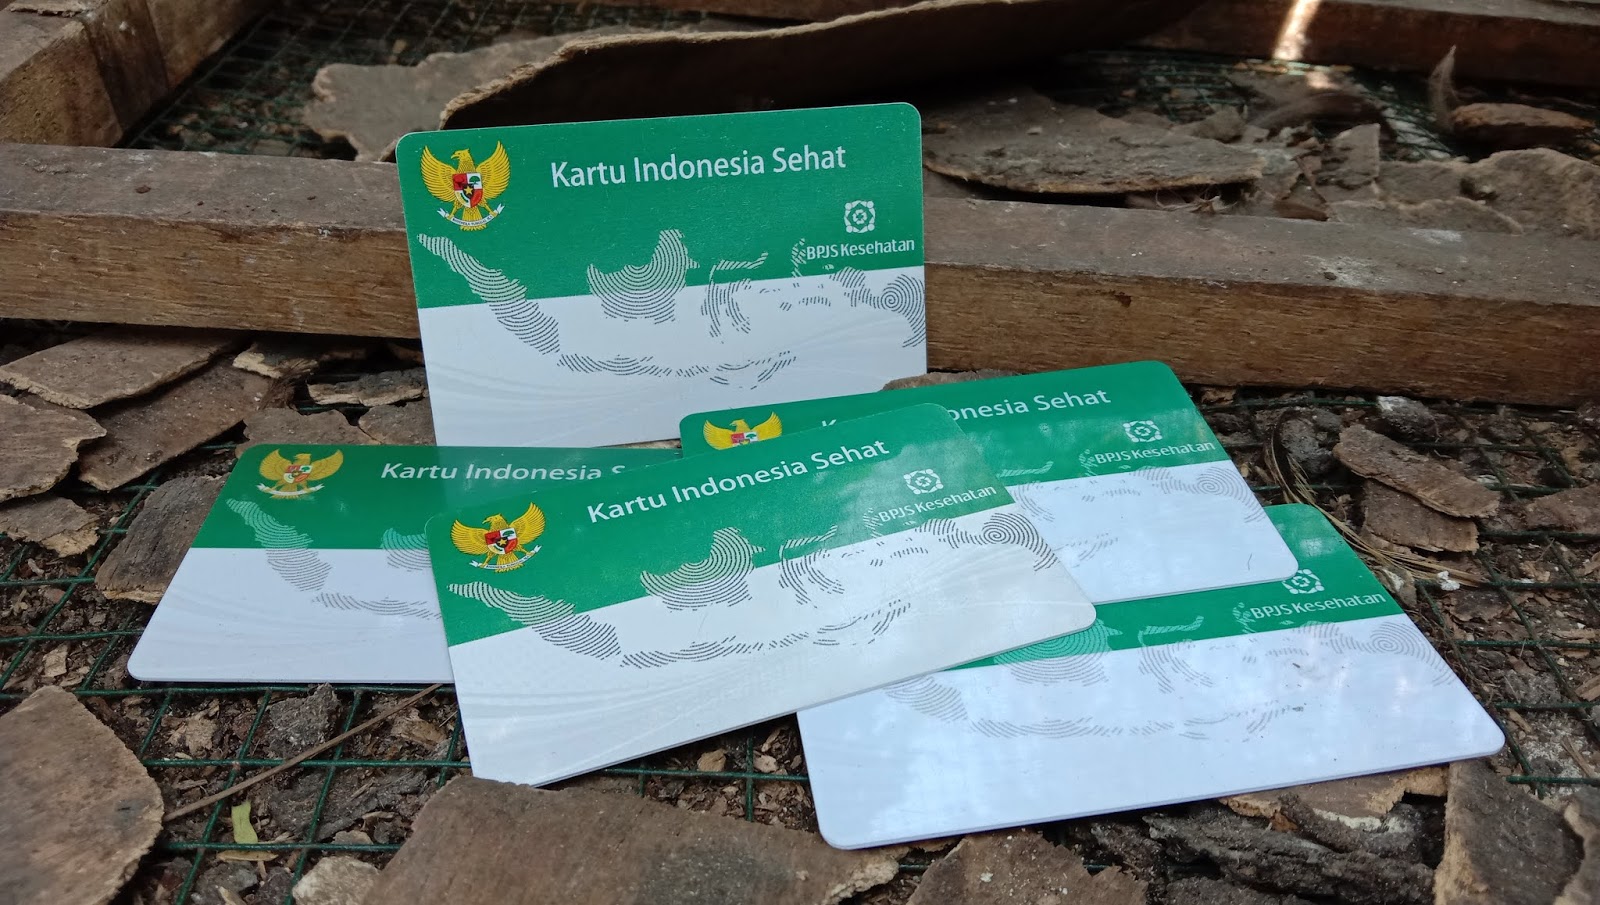 Kartu Indonesia Sehat